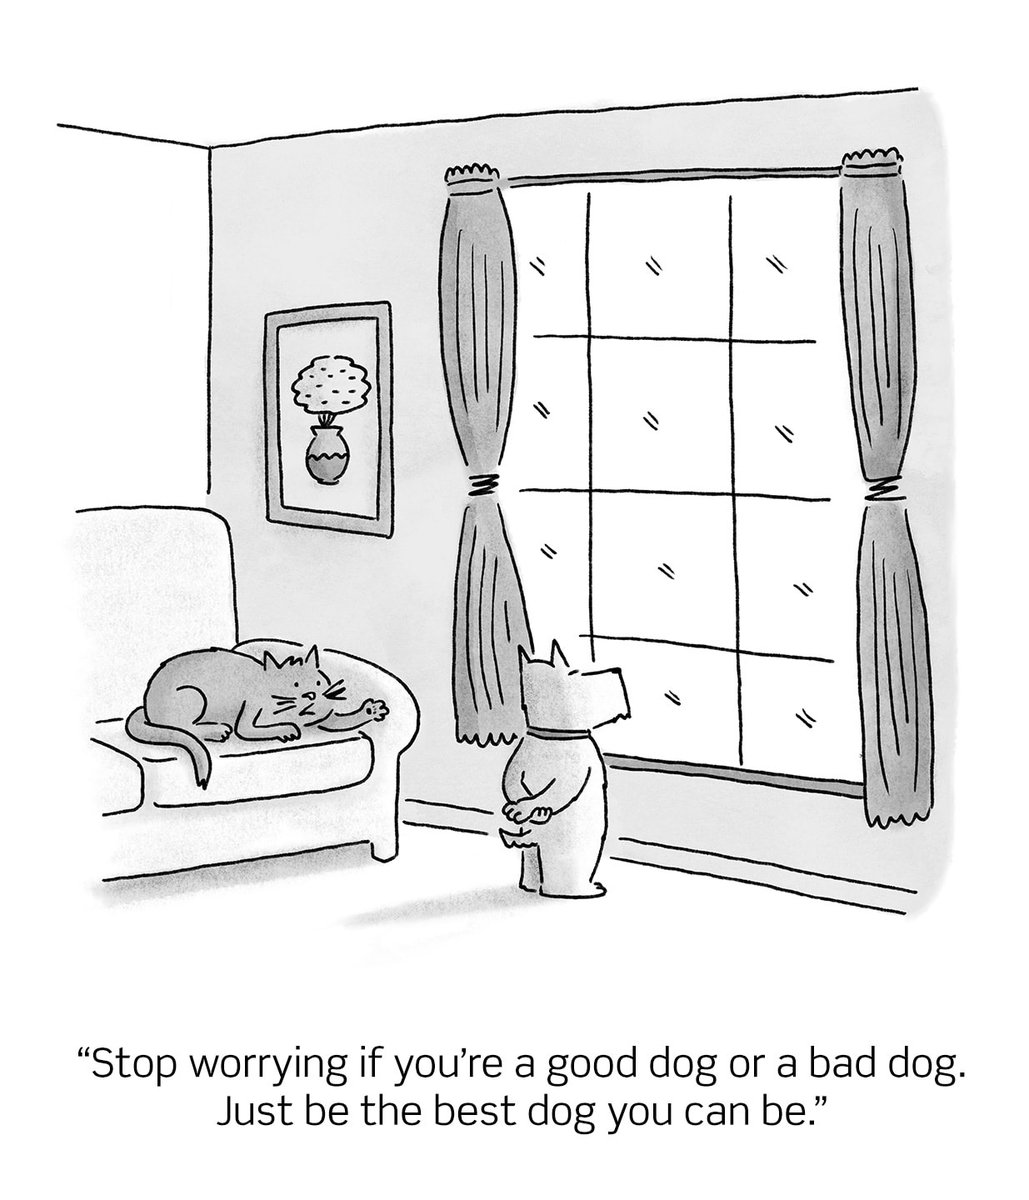 #Cartoon by @DanMisdea #NarrativeCartoons #humor #bestdog #goodboy #unlikelyfriends #selfreflection narrativemagazine.com/issues/narrati…